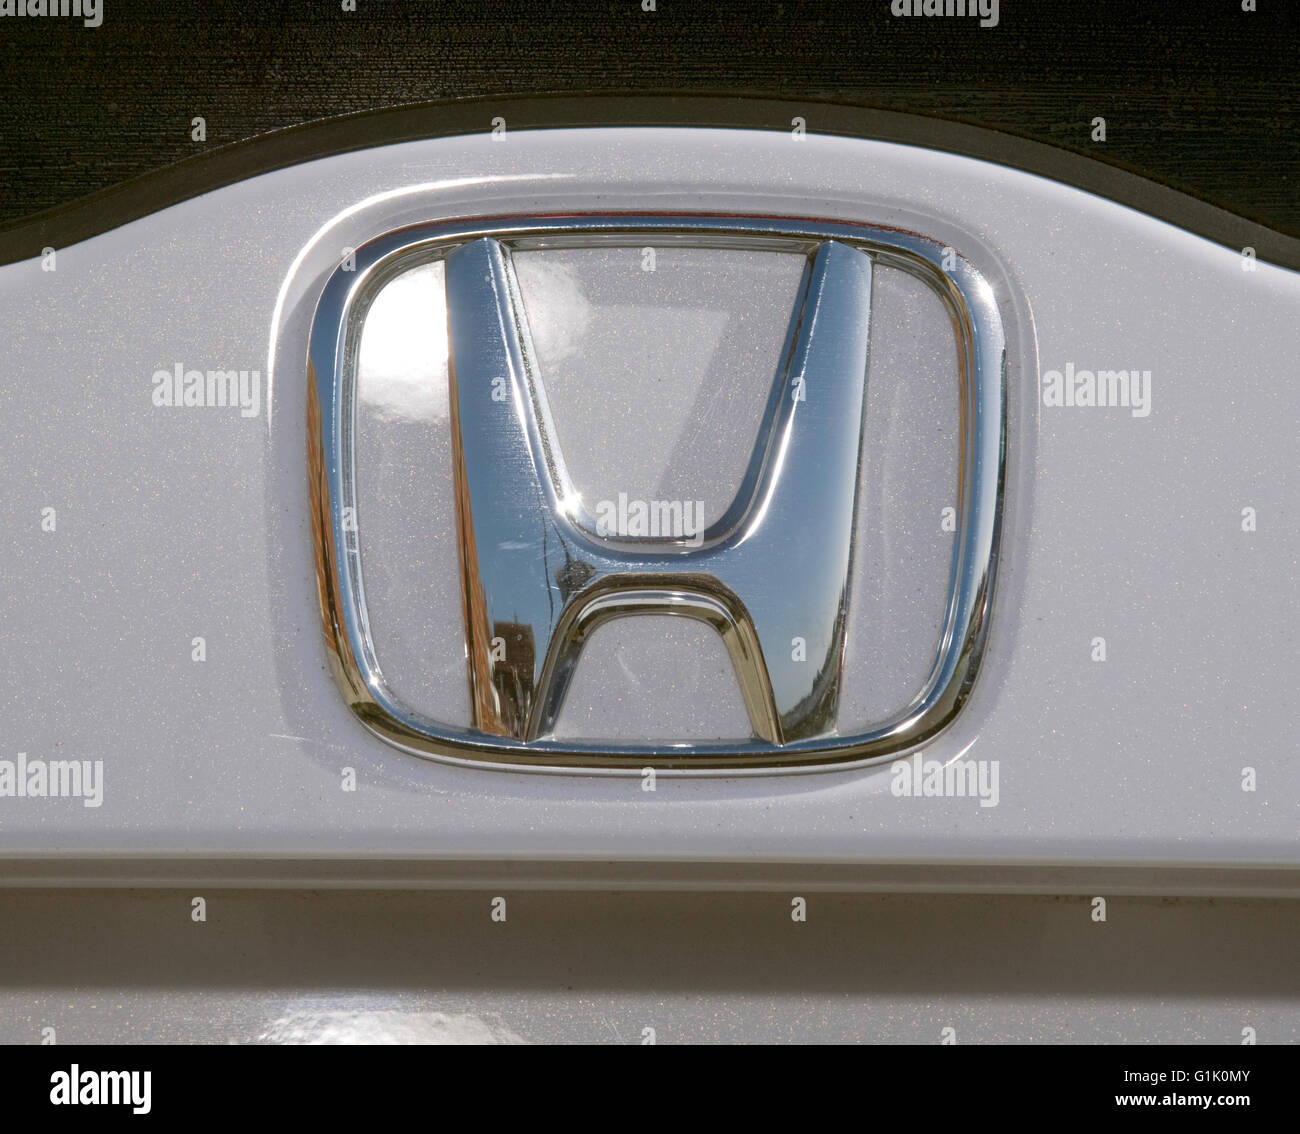 2009 Honda Insight hybrid family hatchback car -  Honda Badge Stock Photo